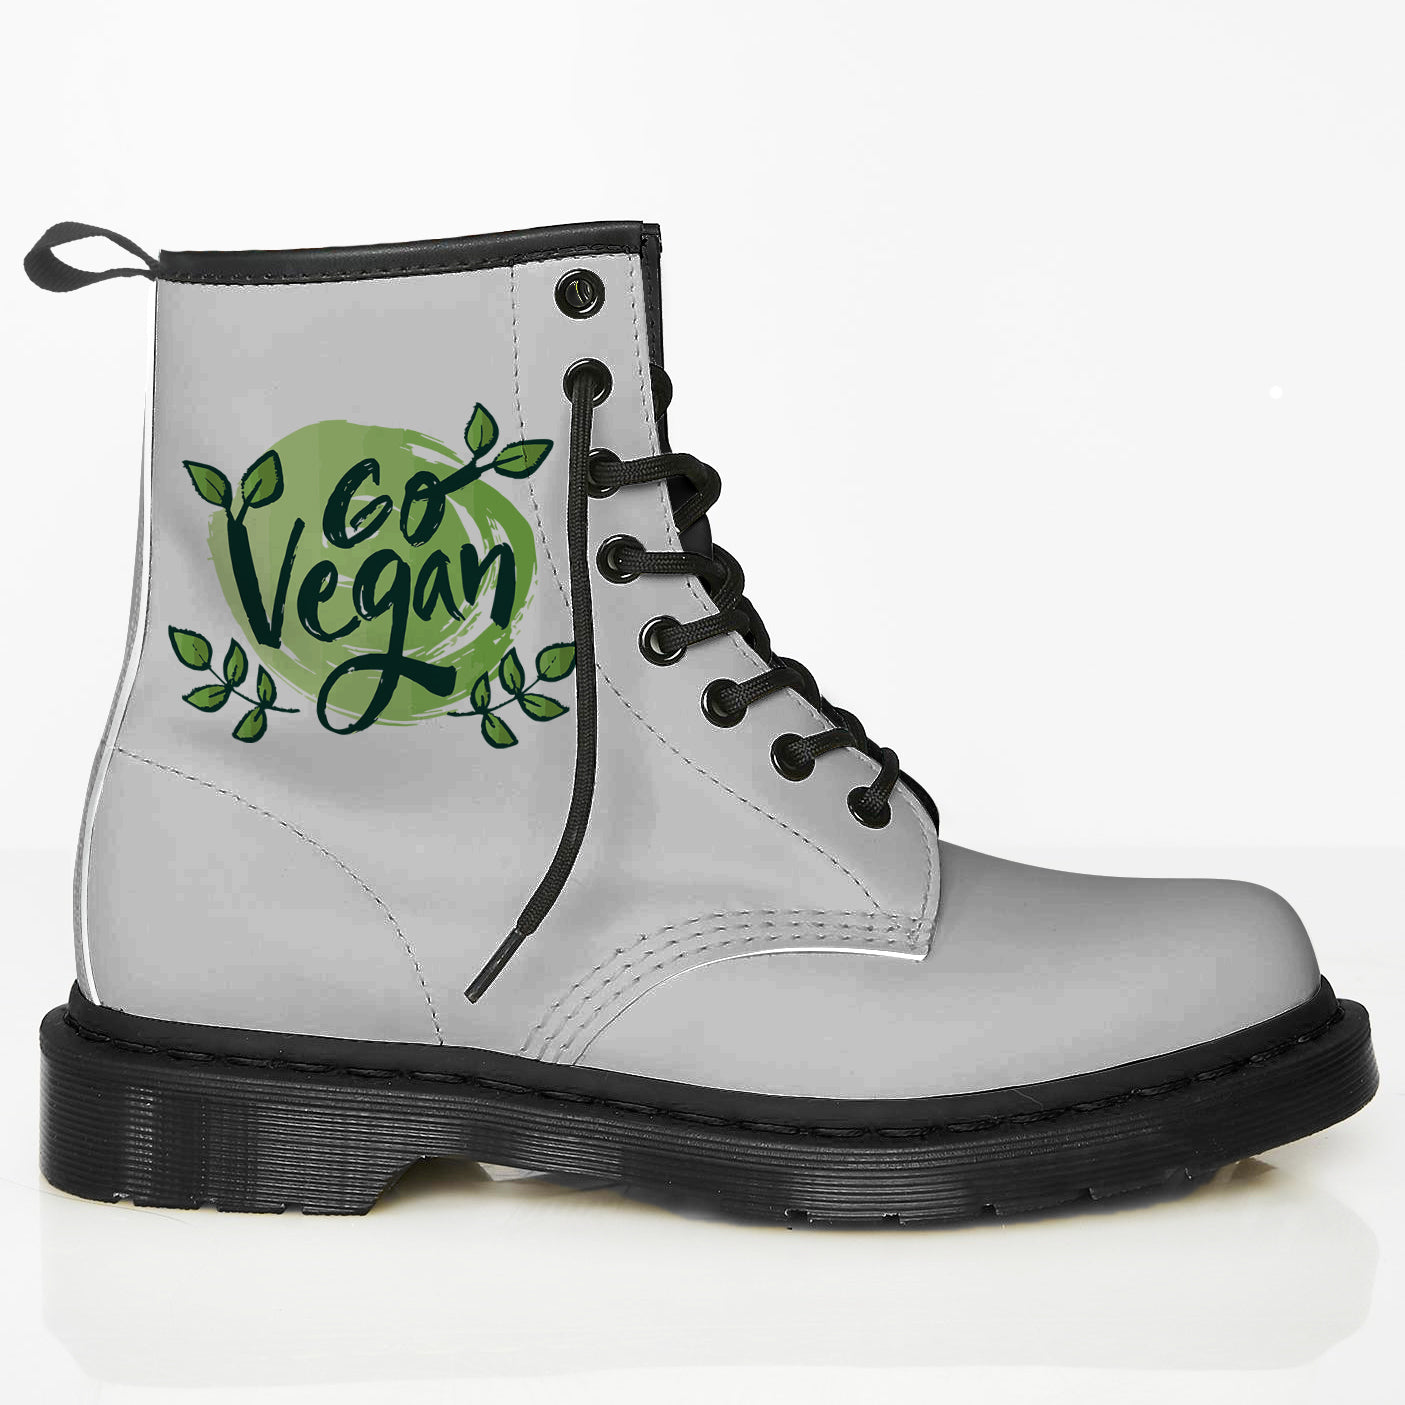 Vegan Boots